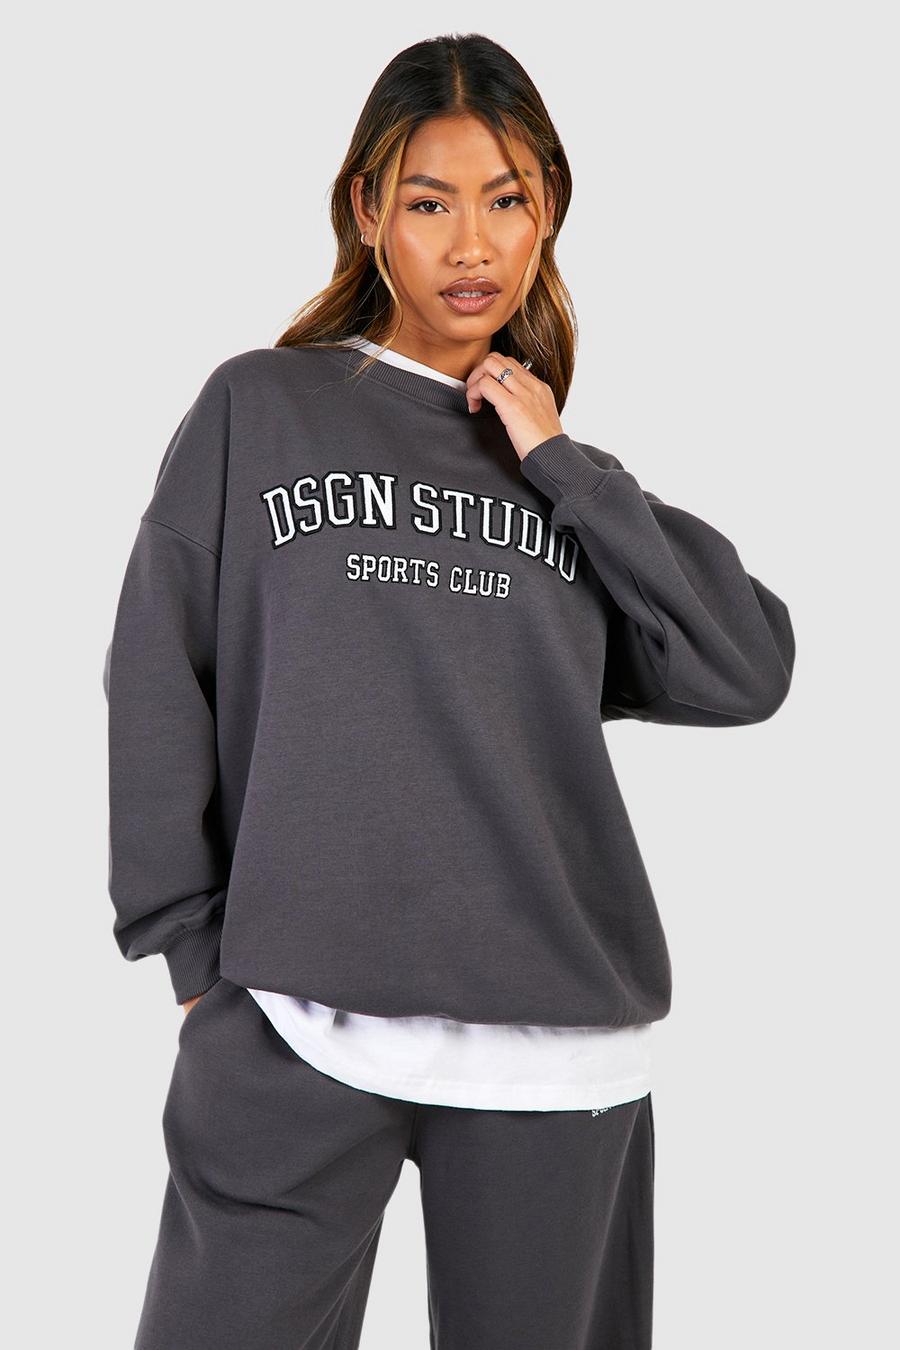 Oversize Sweatshirt mit Dsgn Studio Applikation, Charcoal image number 1